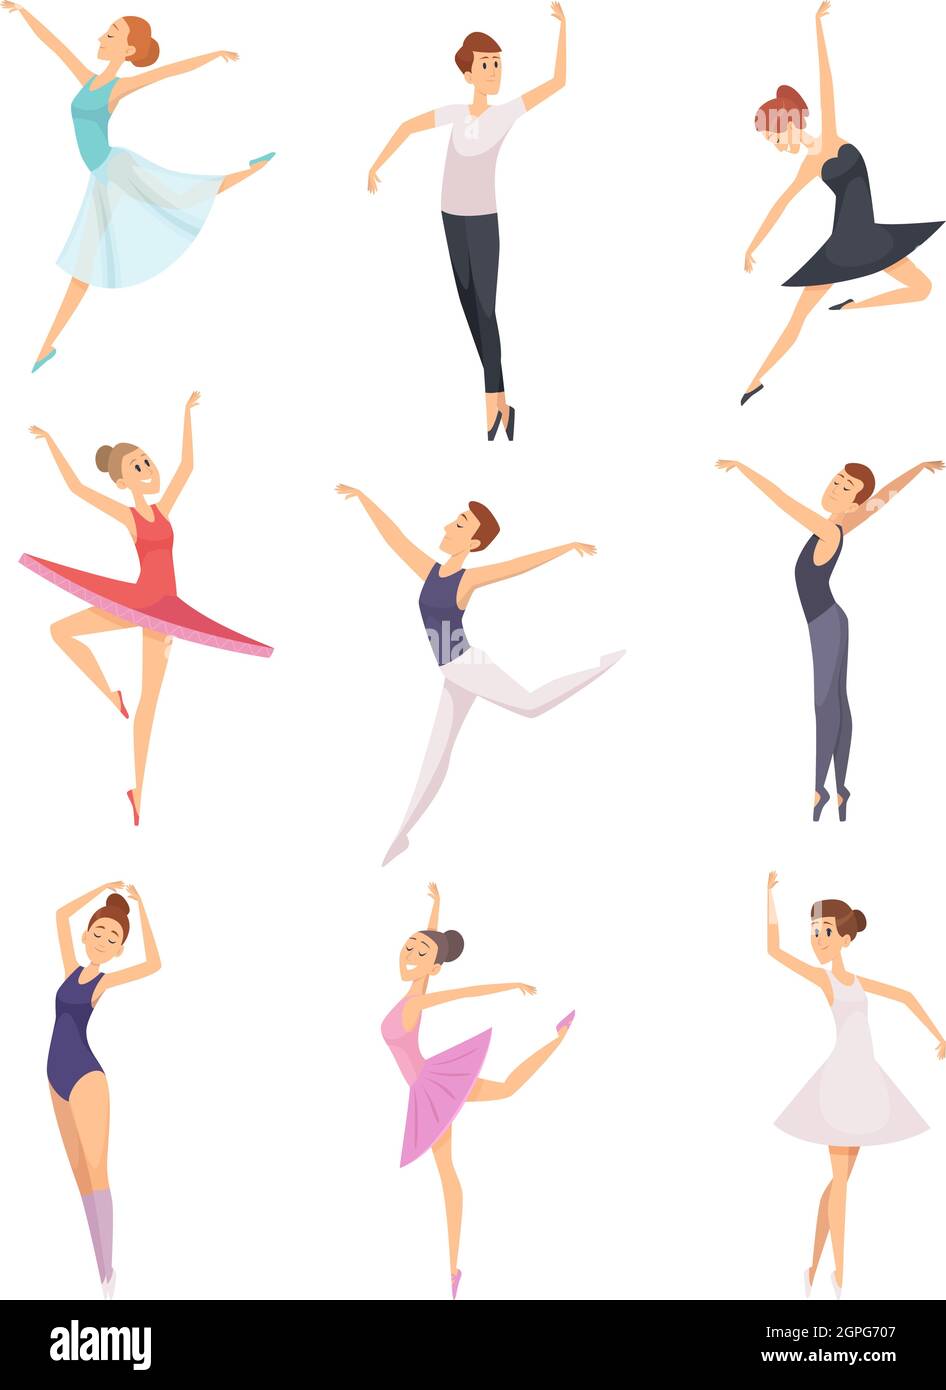 Dancer cartoon hi-res stock photography and images - Alamy